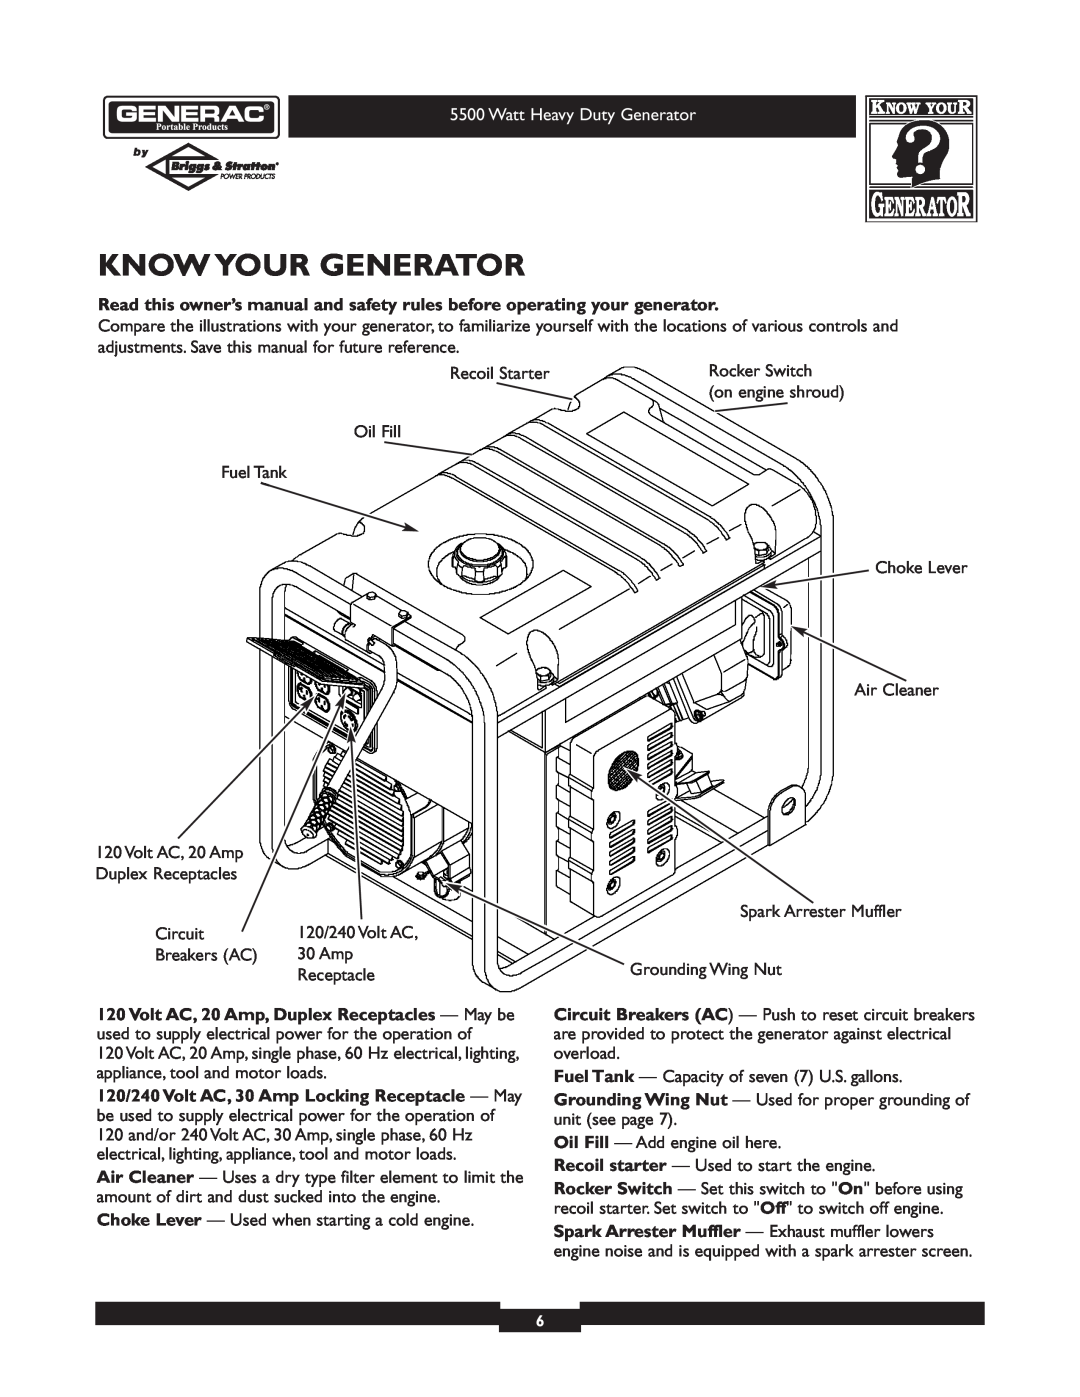 Generac 1654-0 owner manual Know Your Generator 